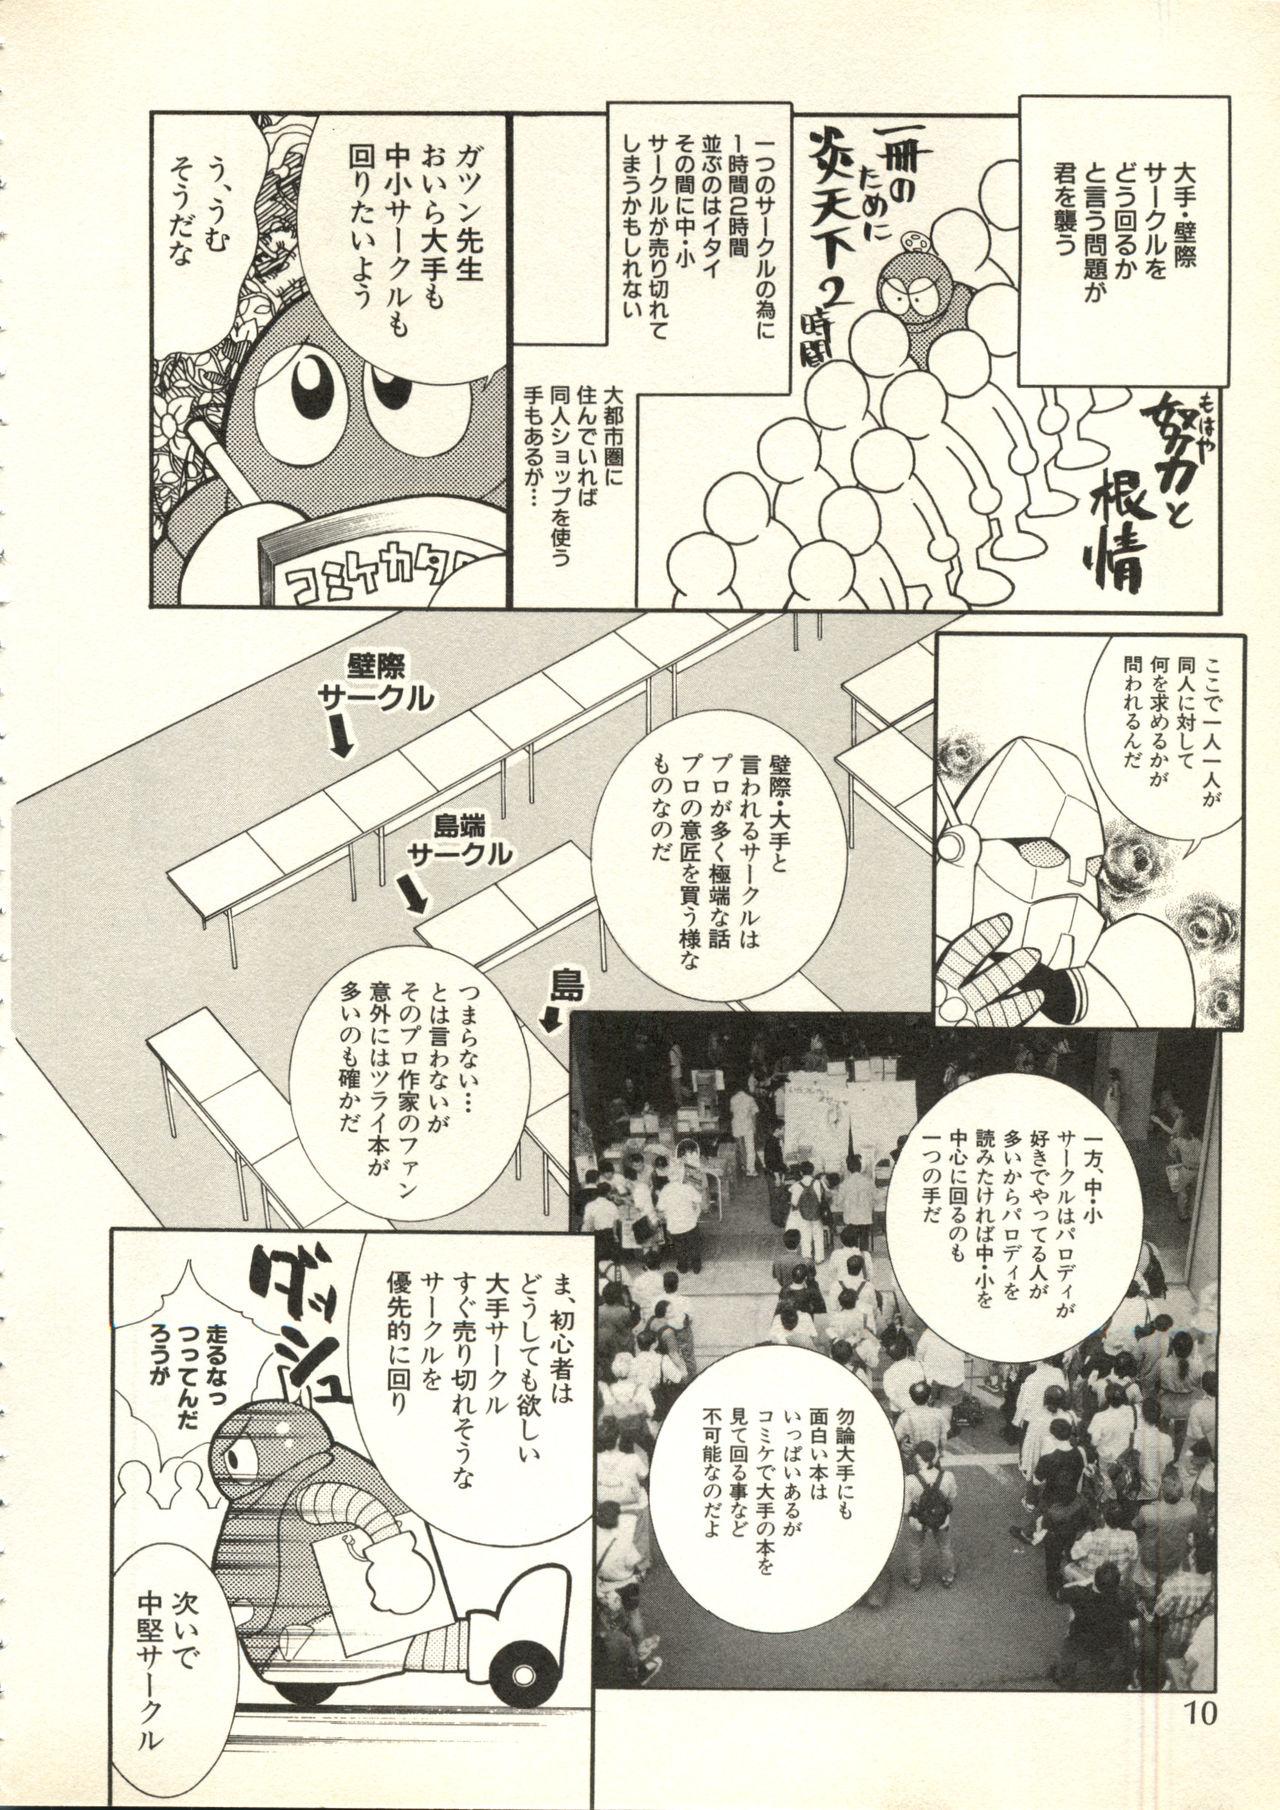 [Anthology] Bishoujo Shoukougun V3 (1) '99 Summer Edition (Various) 10